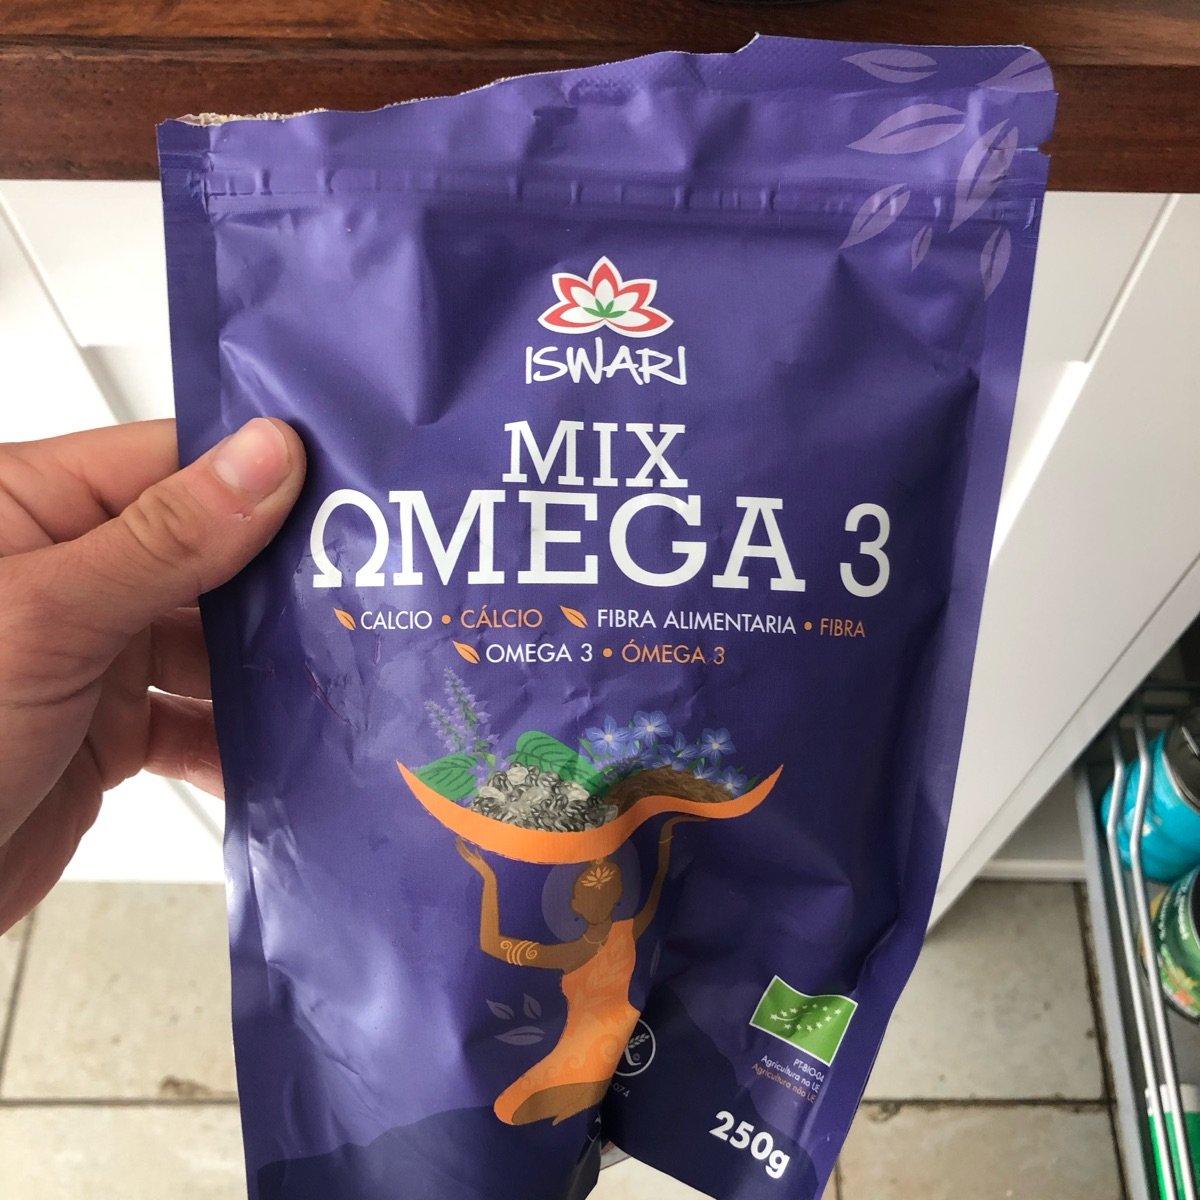 Iswari Mix omega 3 Review | abillion